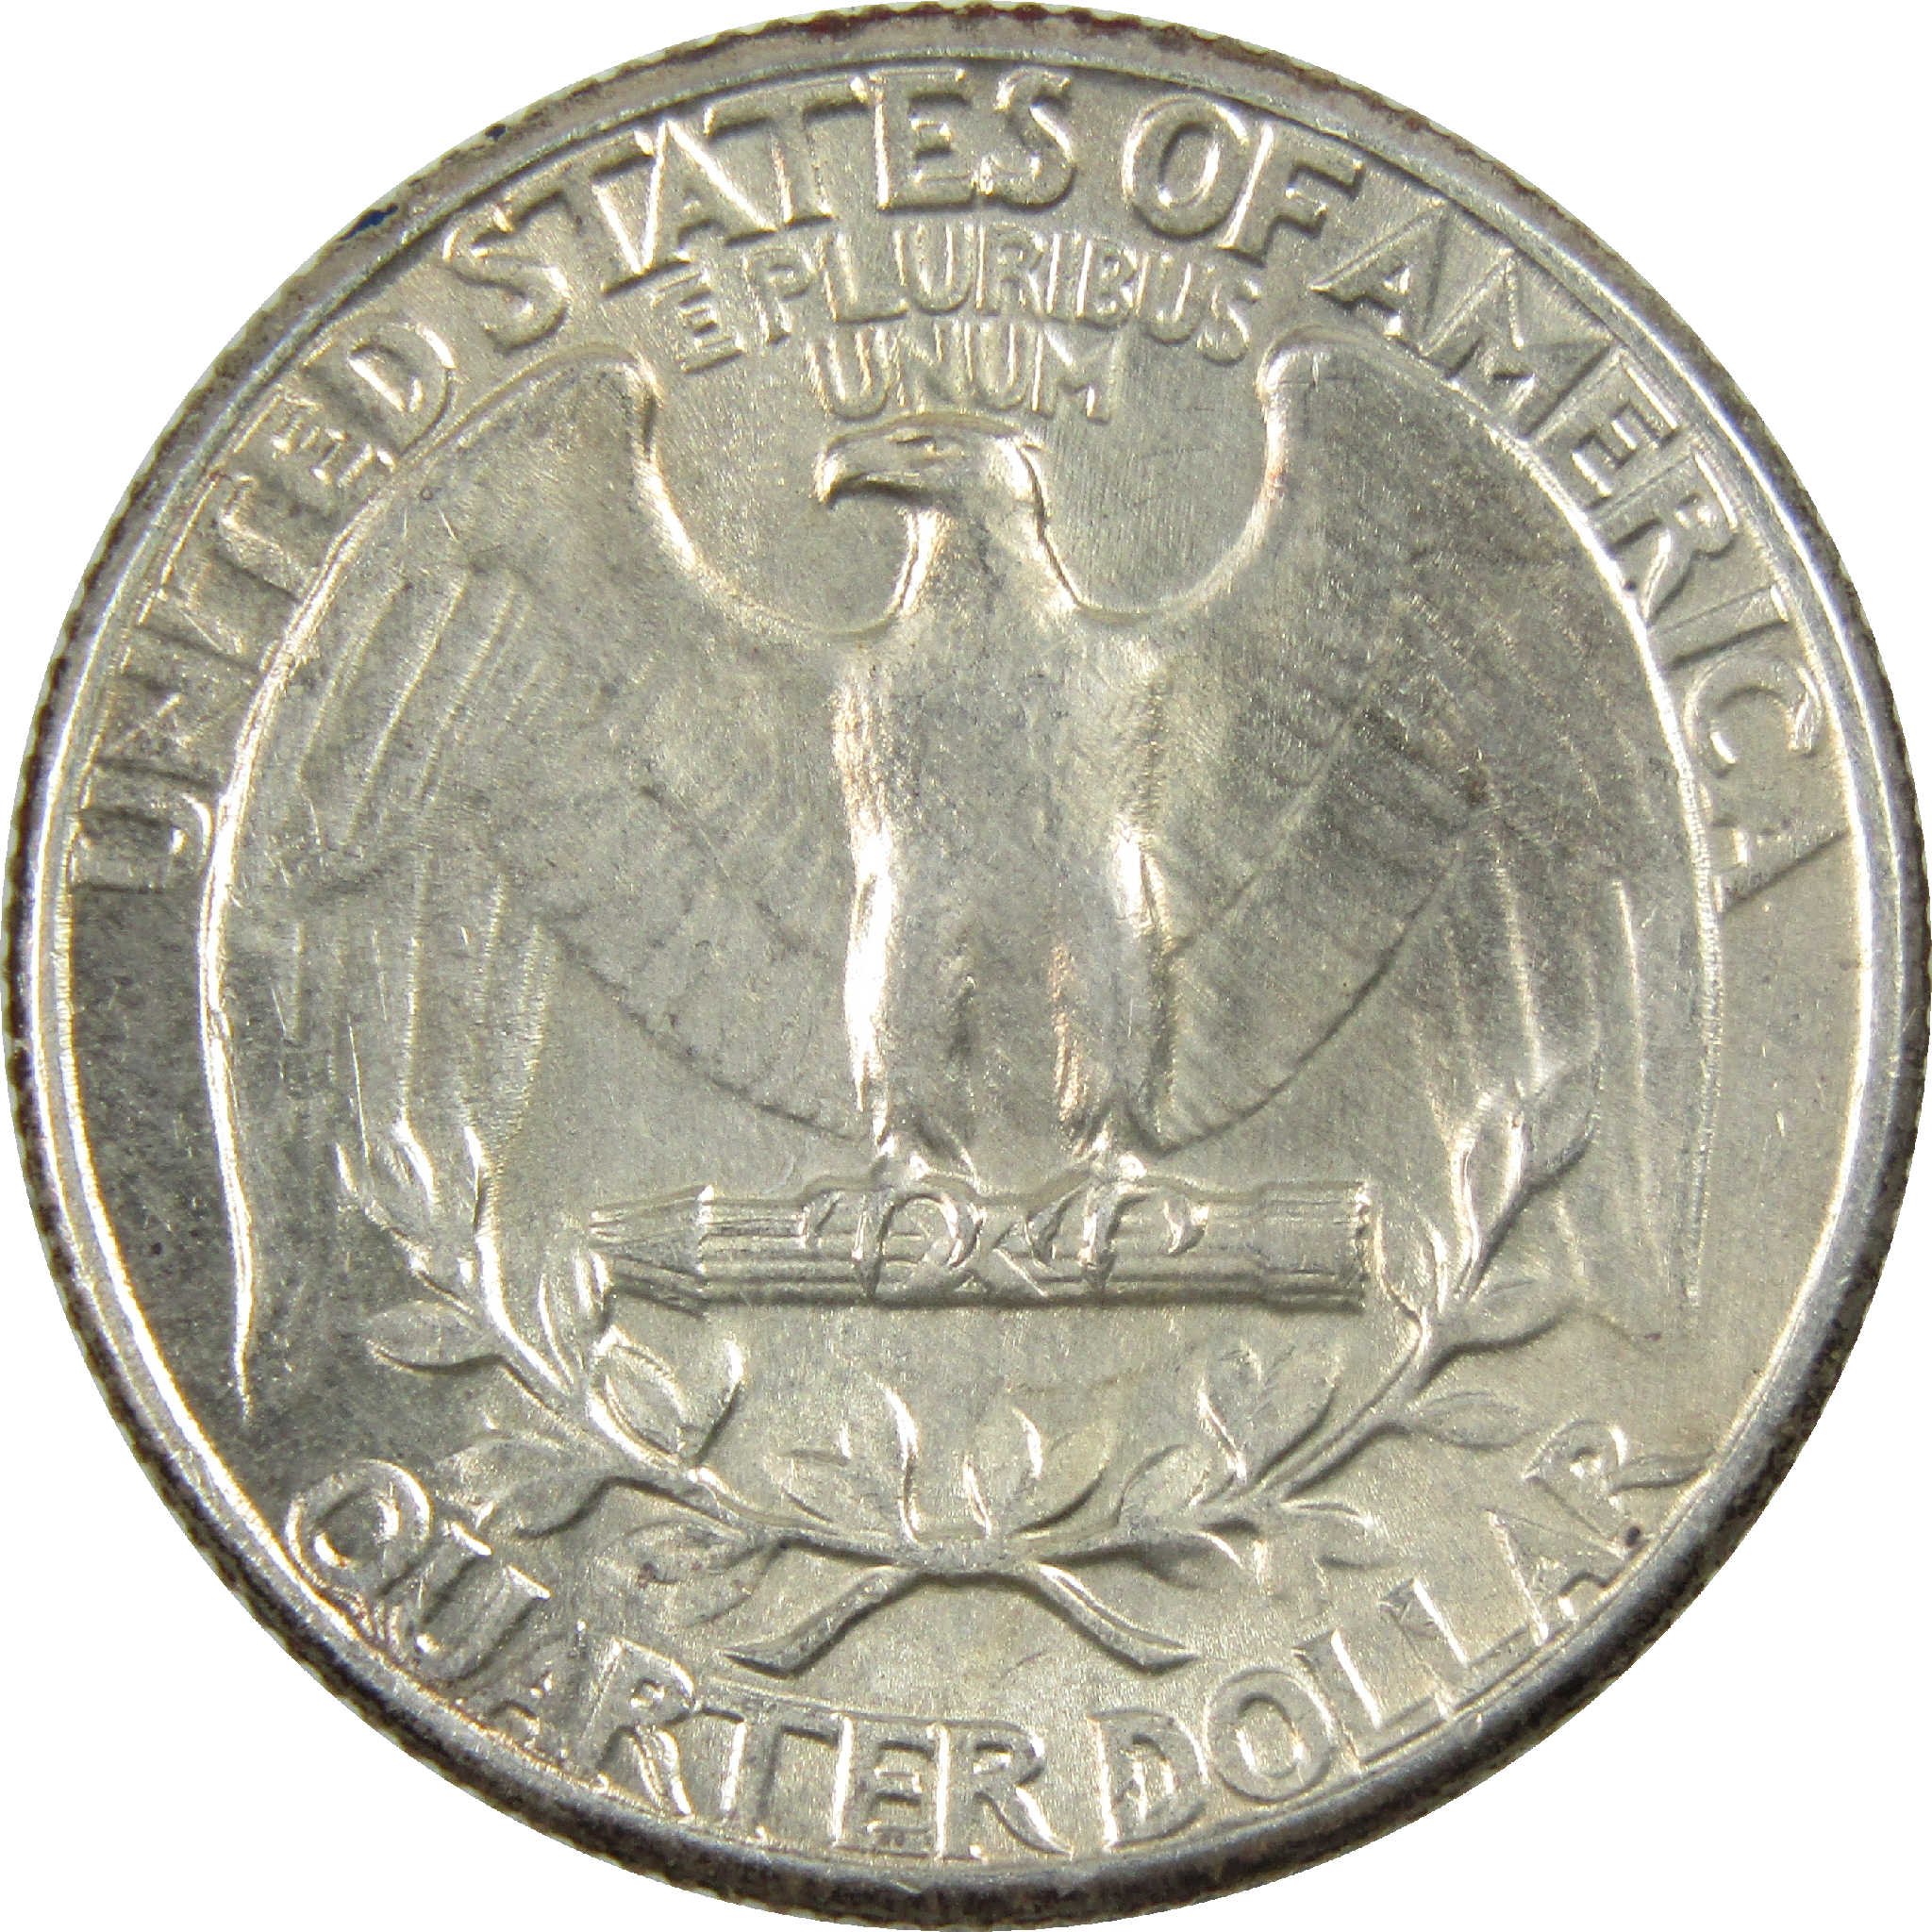 1941 Washington Quarter Uncirculated Details Silver 25c SKU:I12321